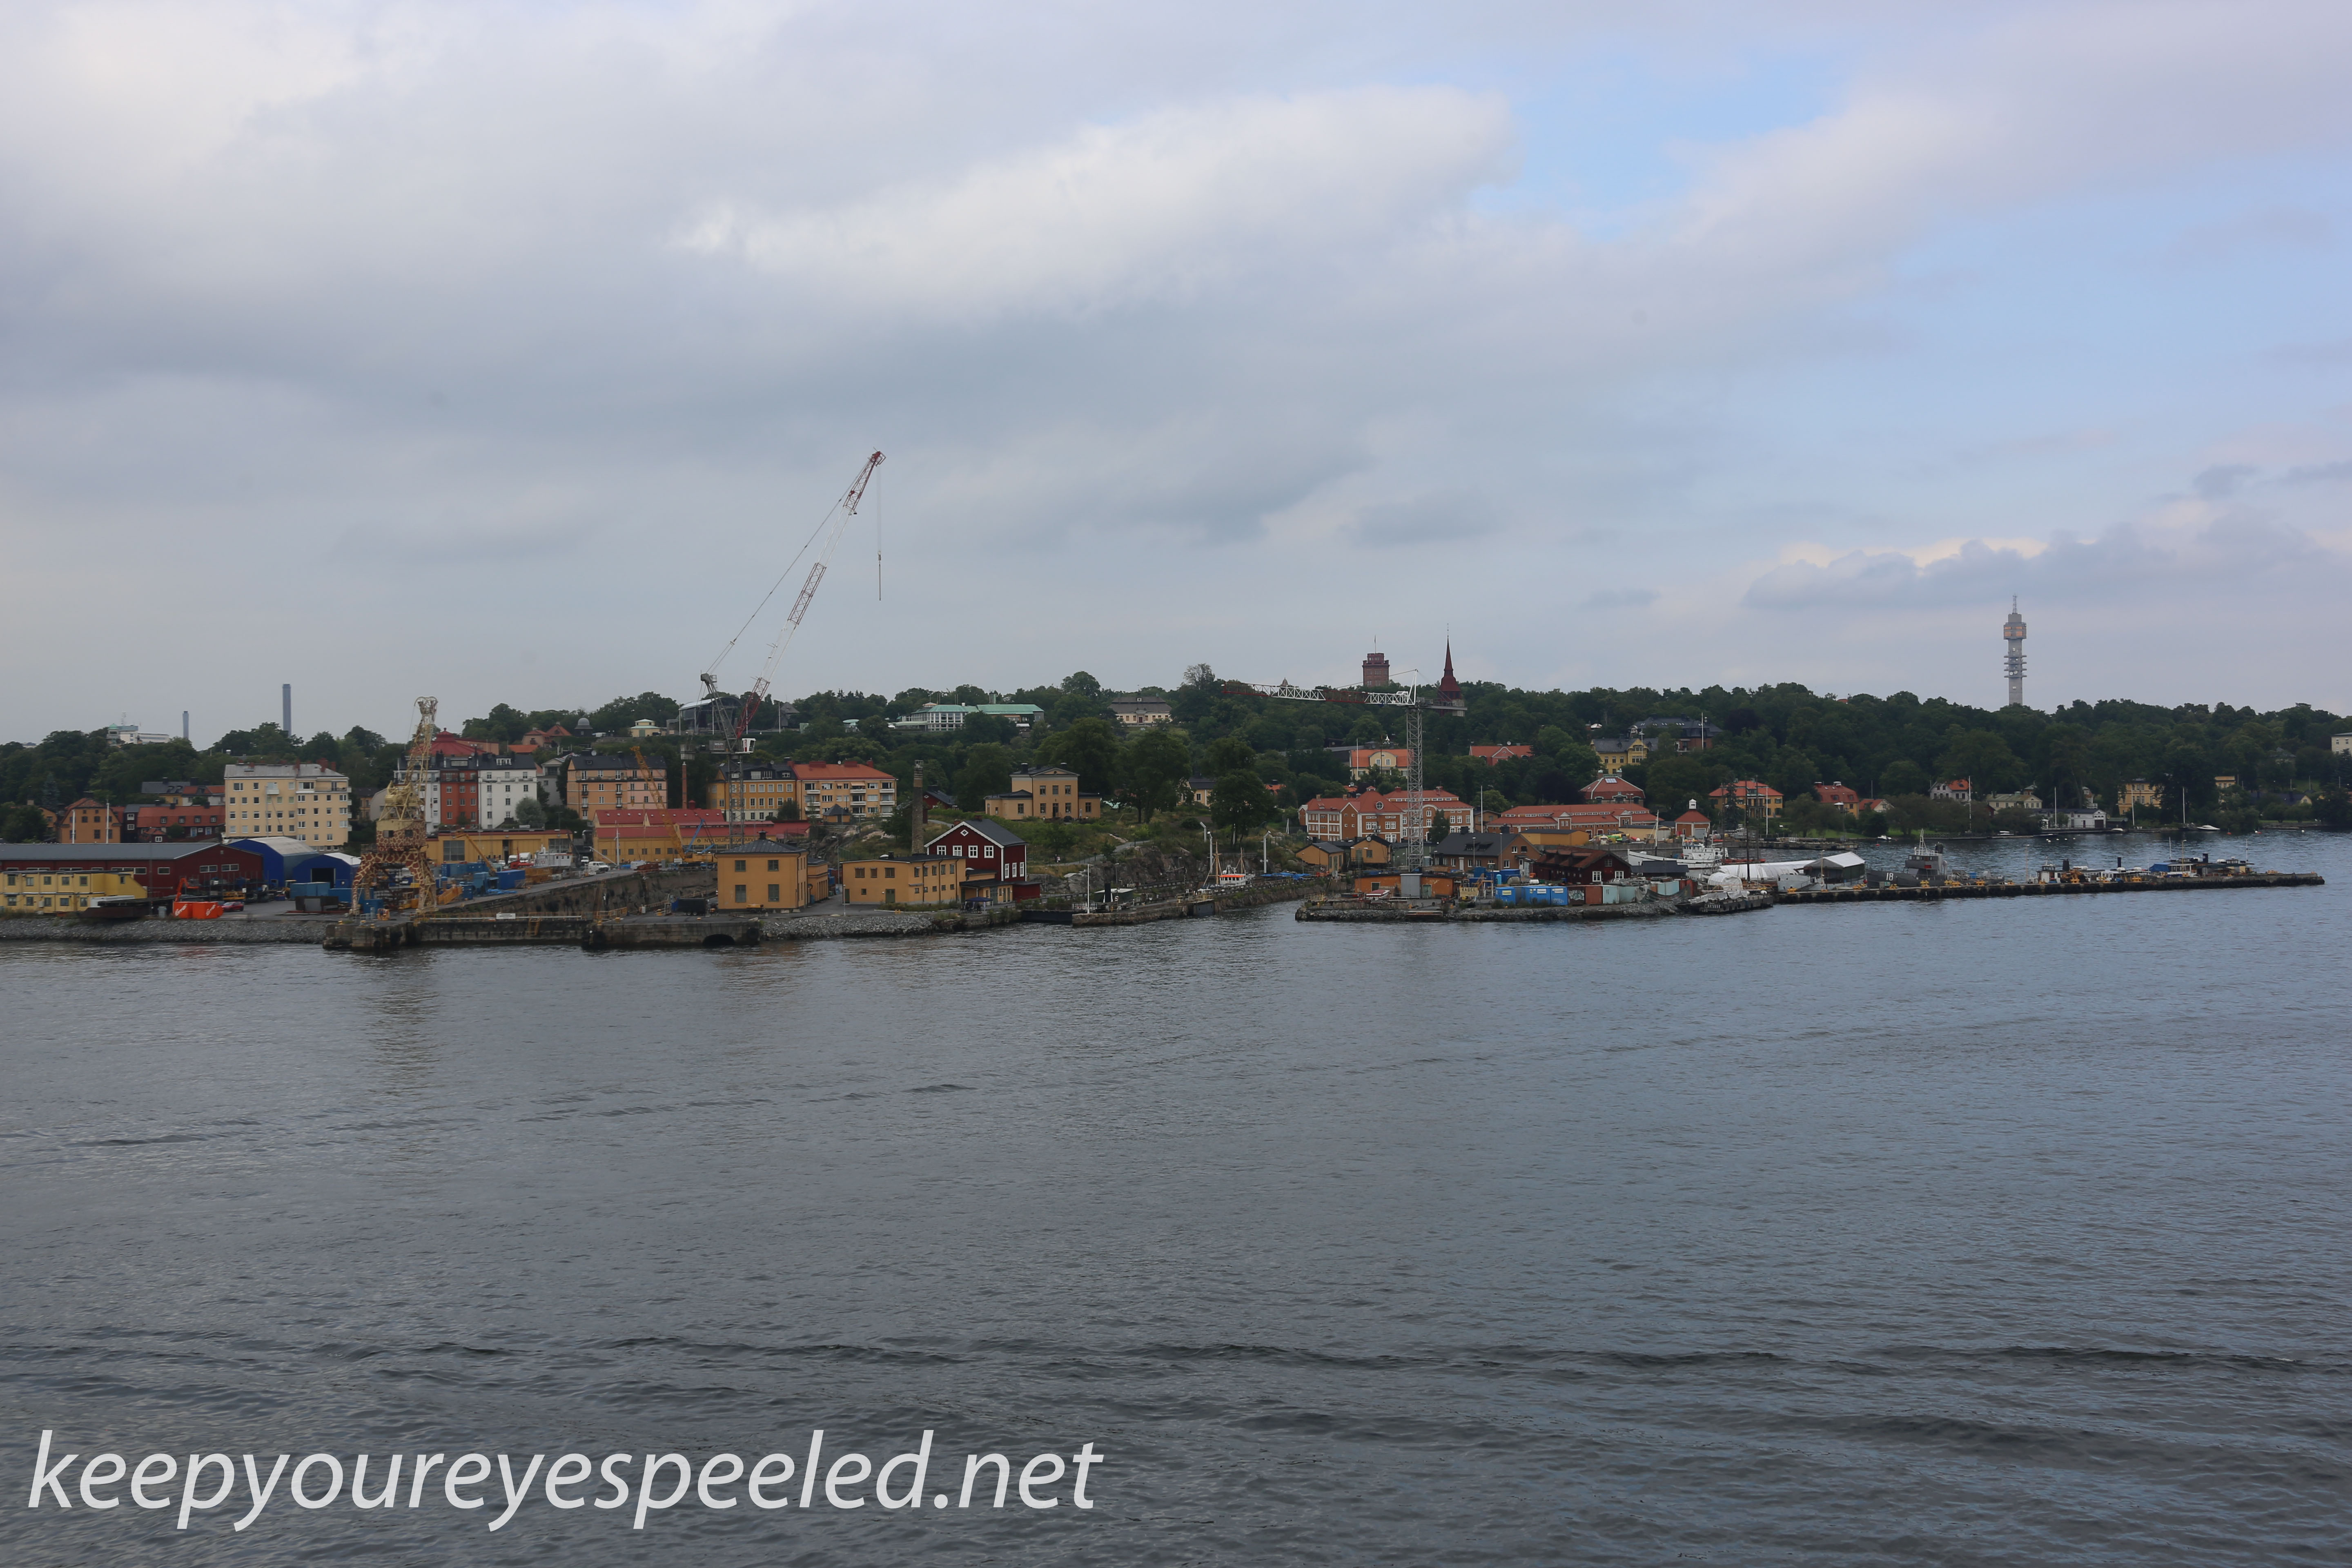 Stockholm to Helsinki deck photos (1 of 27)